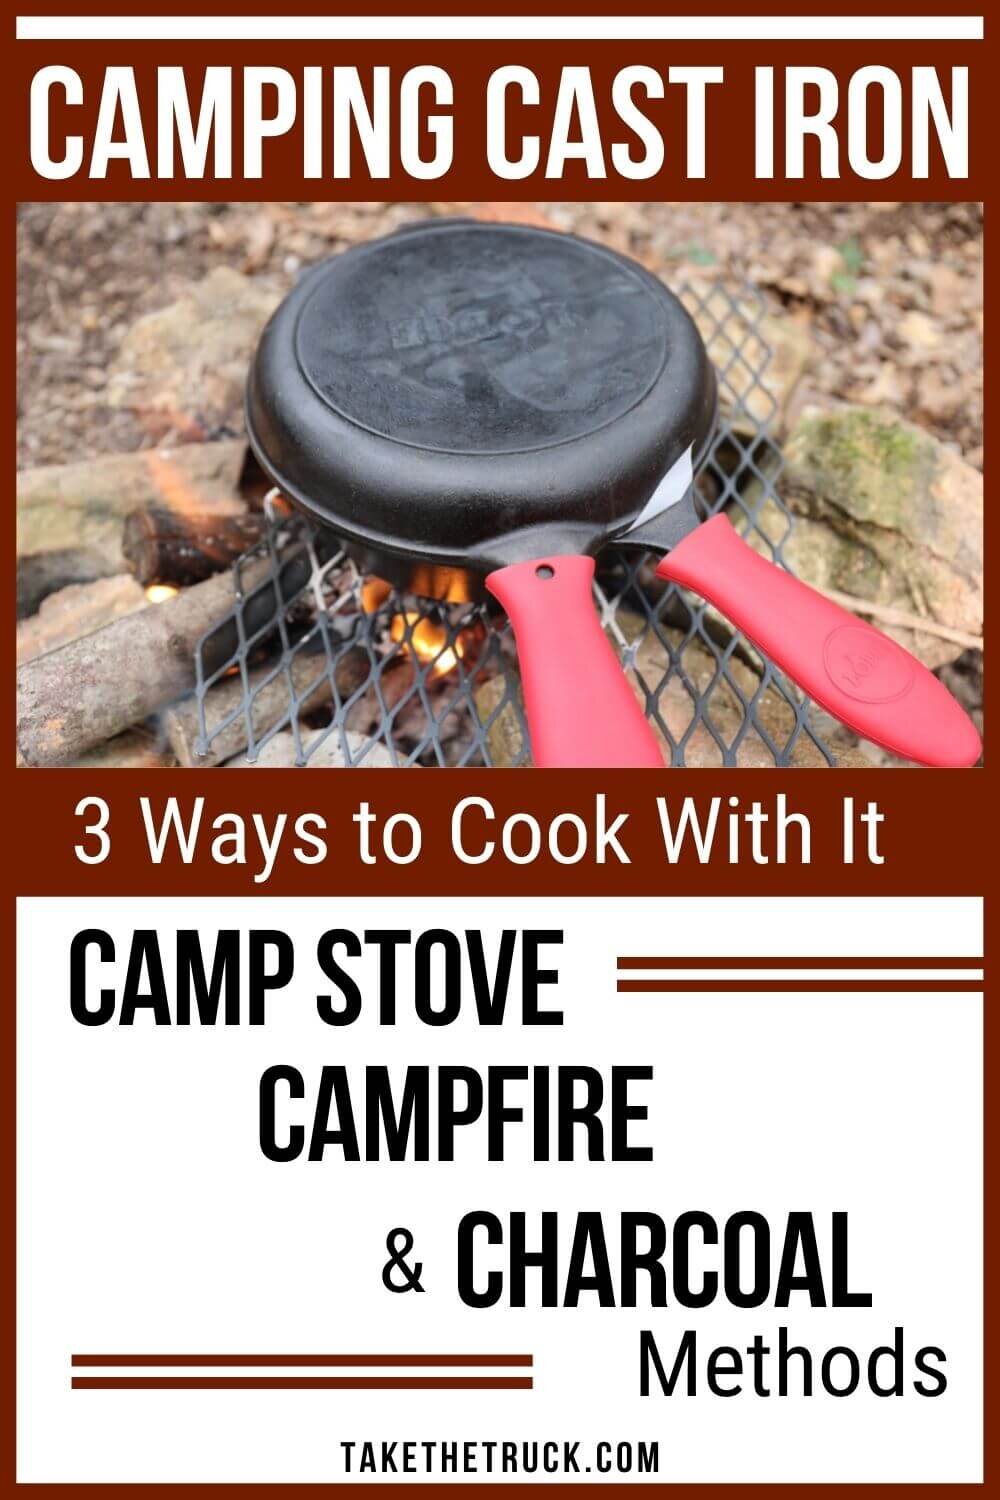 https://images.squarespace-cdn.com/content/v1/5bbd67d490f9042649da280e/1630934865094-B6FVRT1U0MXL7S7548K8/cast-iron-camping-cookware-cast-iron-campfire-cooking.jpg